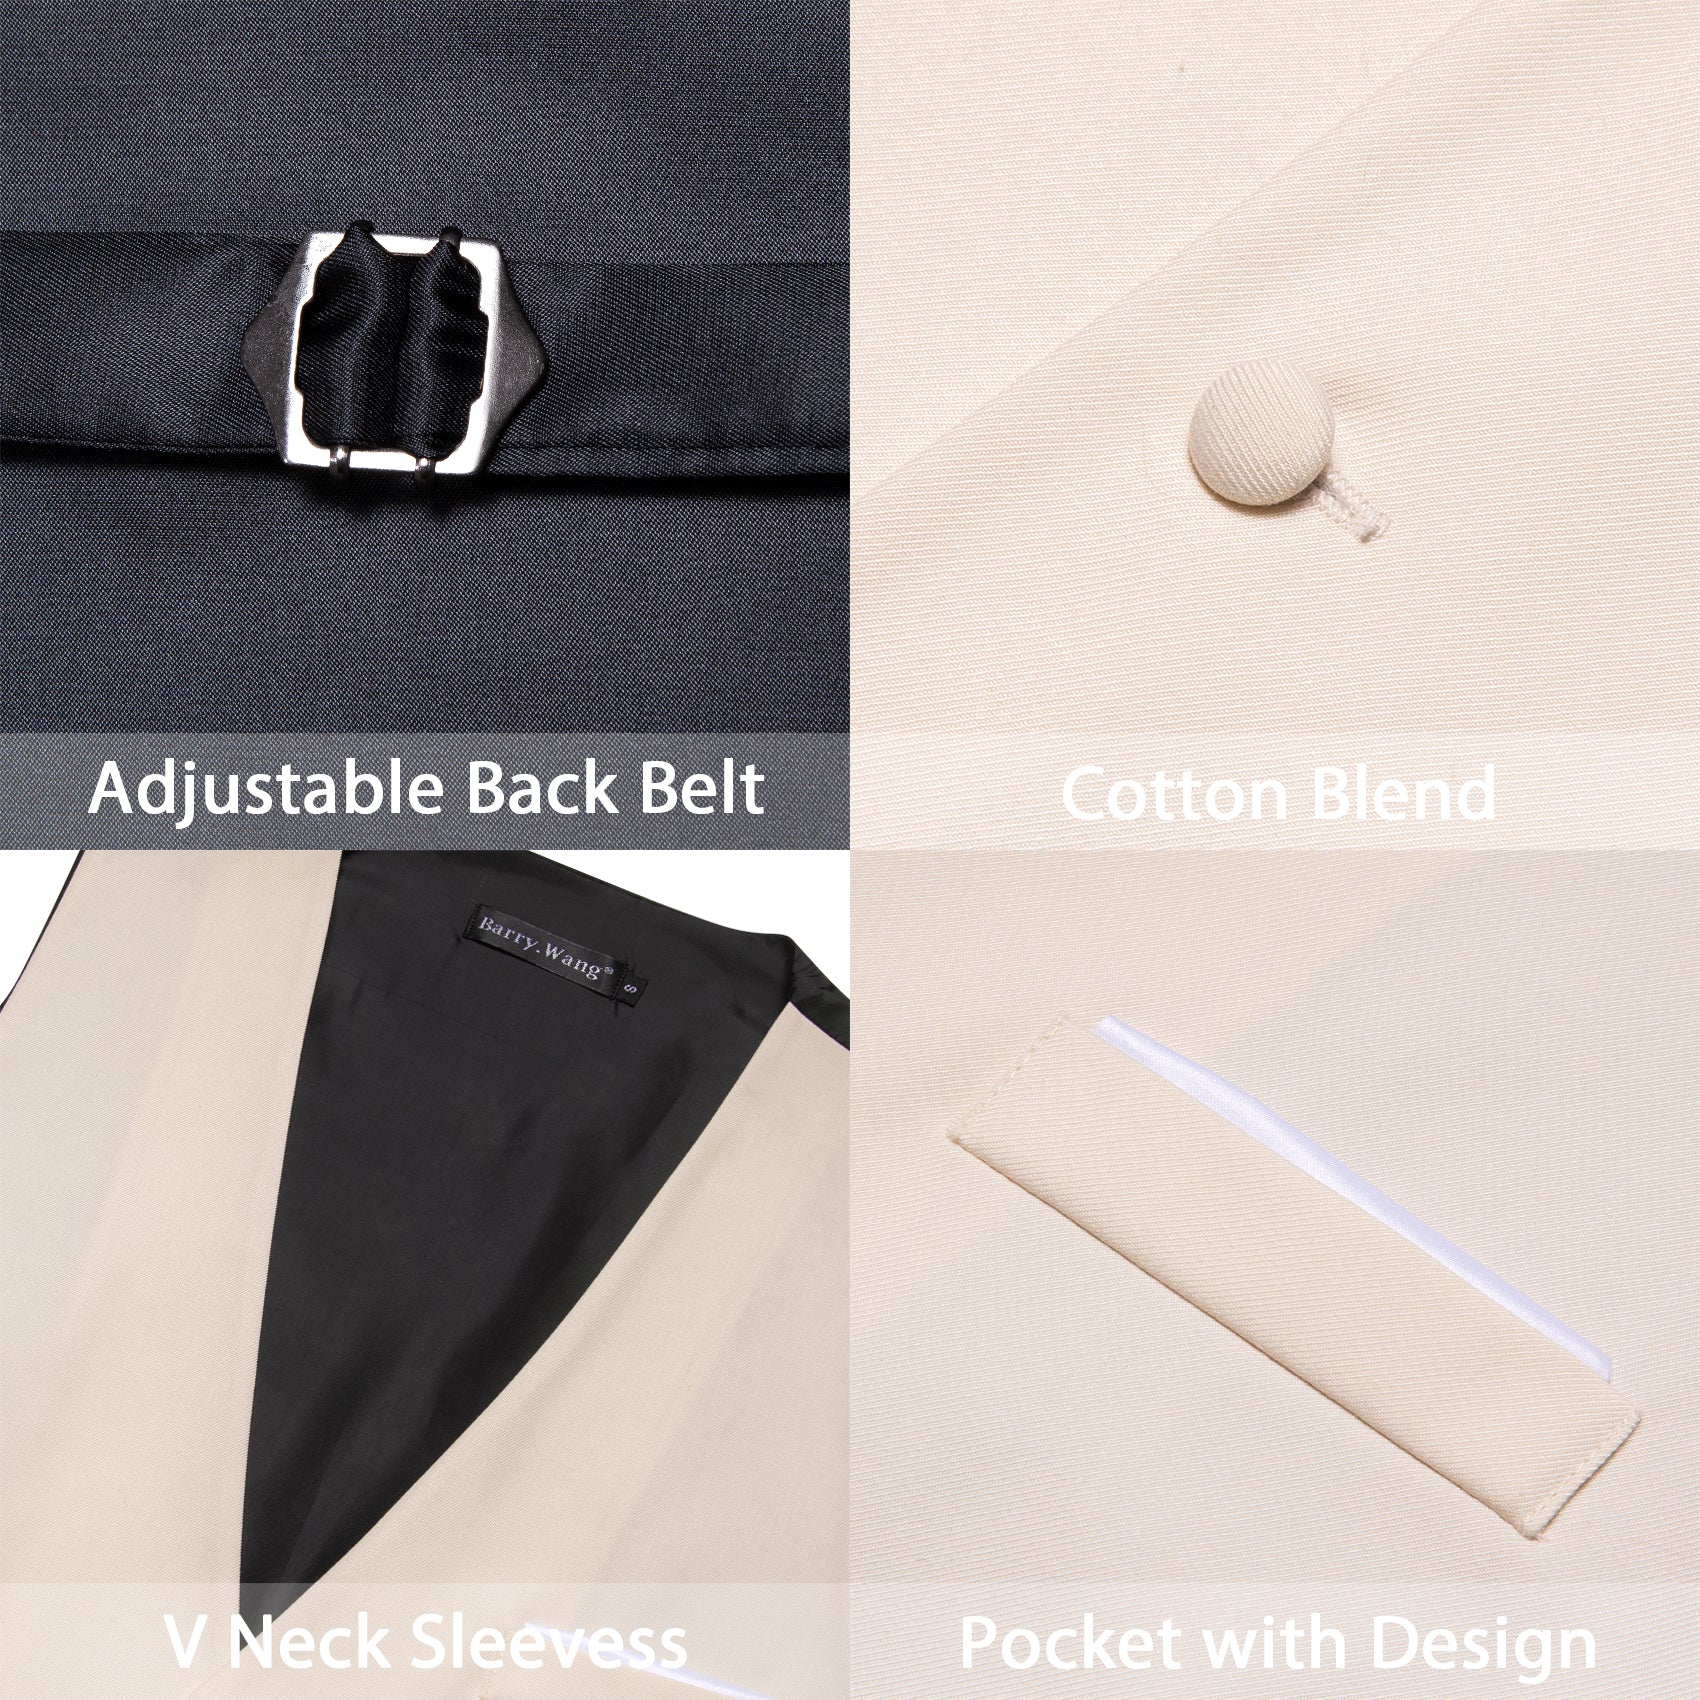 New Cornsilk Solid V-Neck Waistcoat Vest for Business